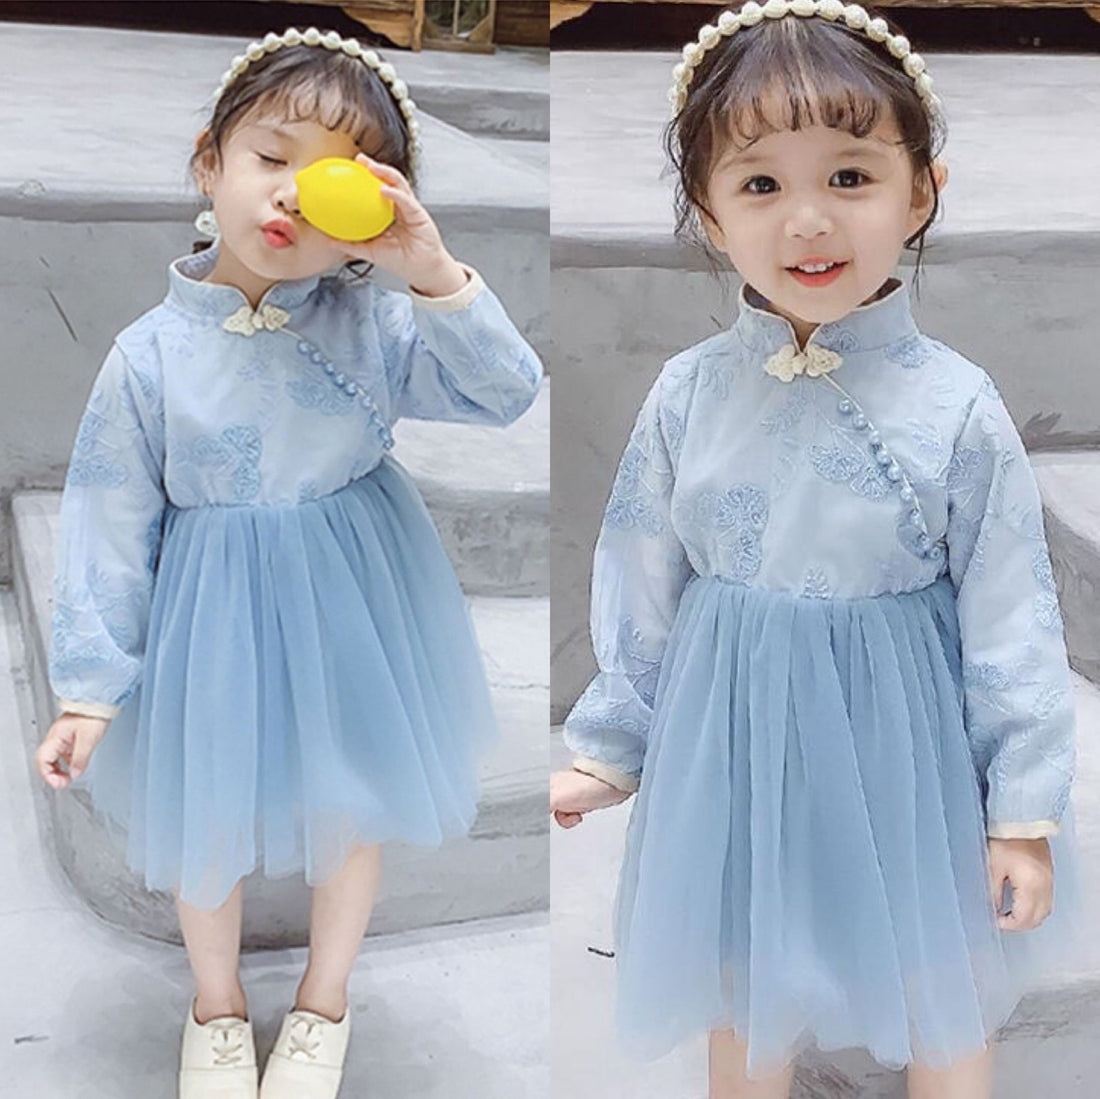 [507542] - Dress Import Budaya Tradisional Anak - Motif Shanghai Model